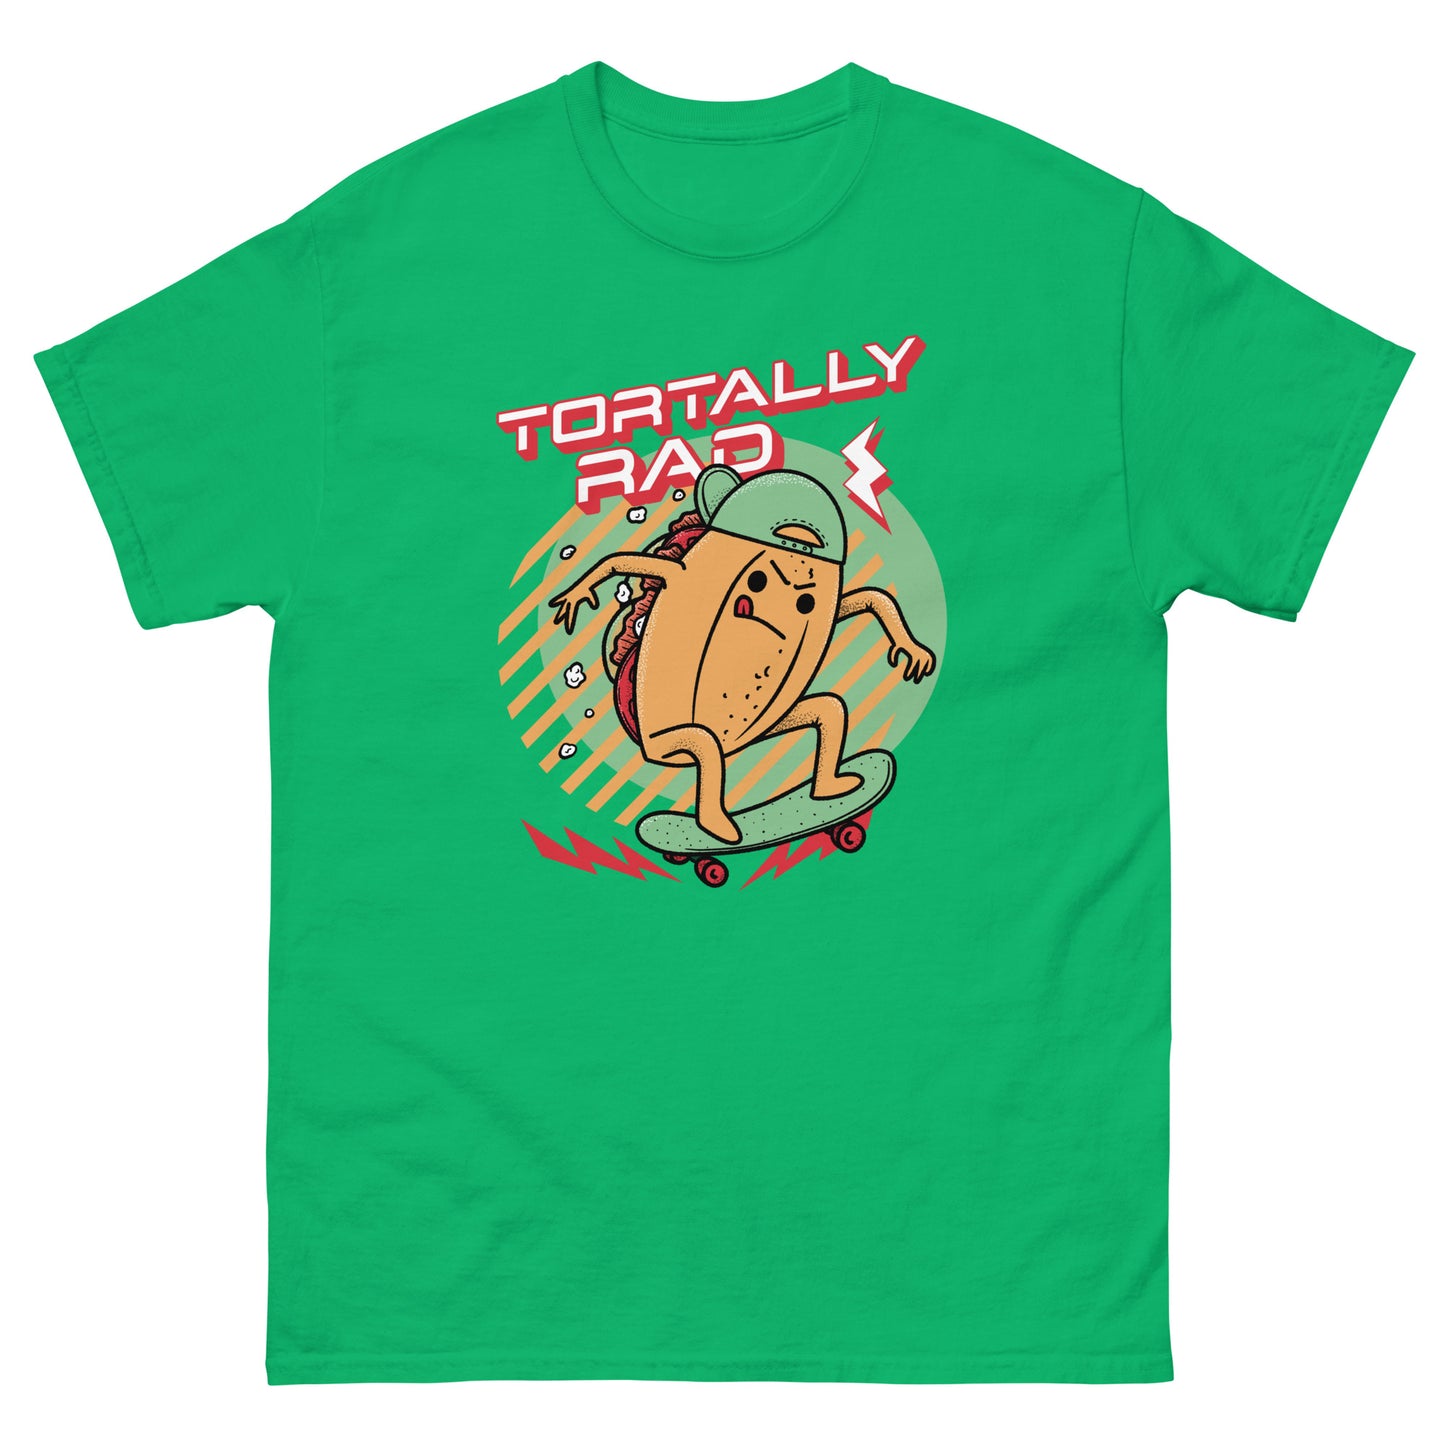 Tortally Rad Torta Funny Mexican Food T-shirt